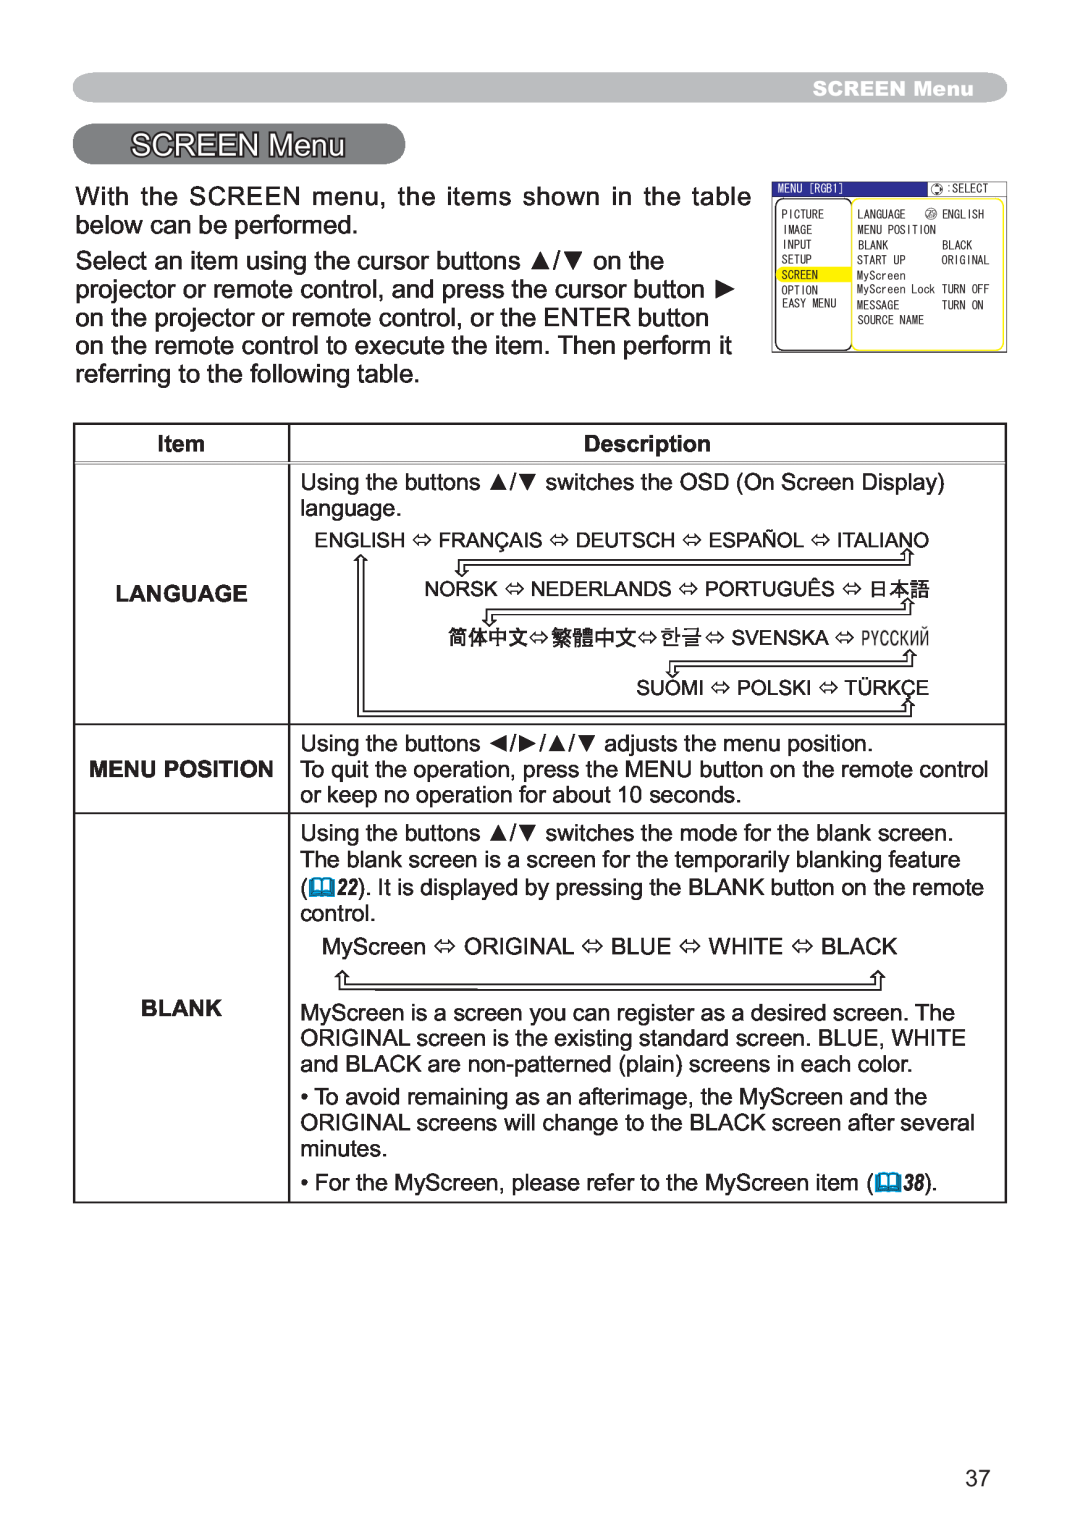 Hitachi ED-X12 user manual SCREEN Menu, Item, Description, Language, Menu Position, Blank 